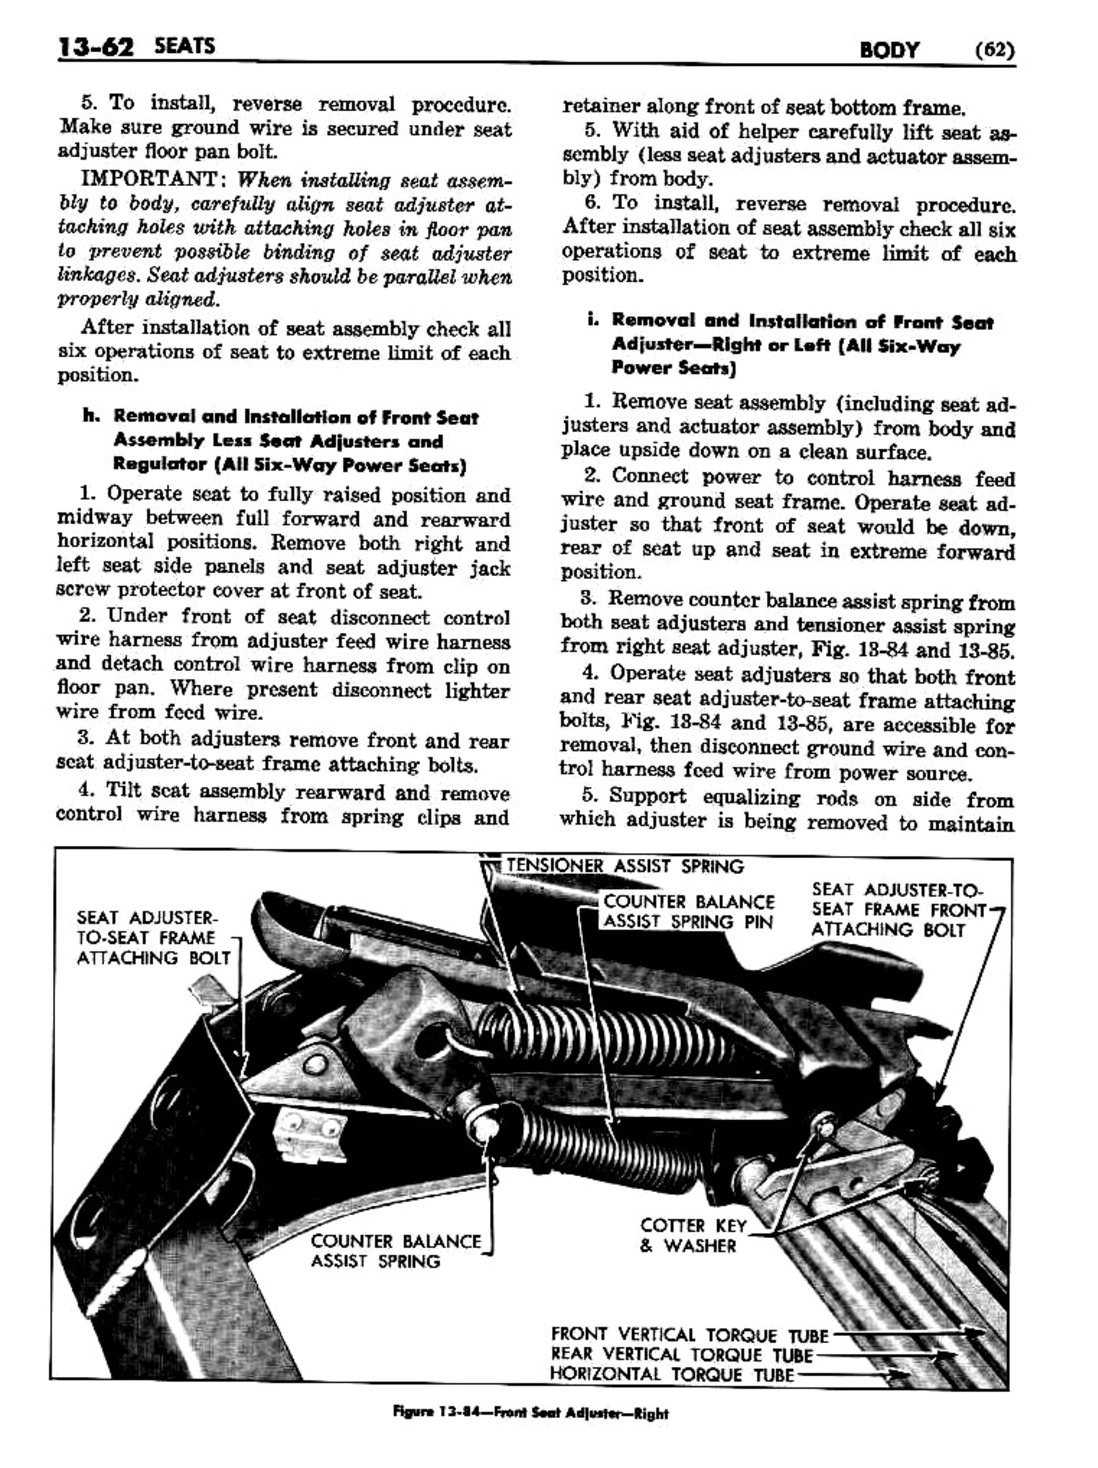 n_1957 Buick Body Service Manual-064-064.jpg